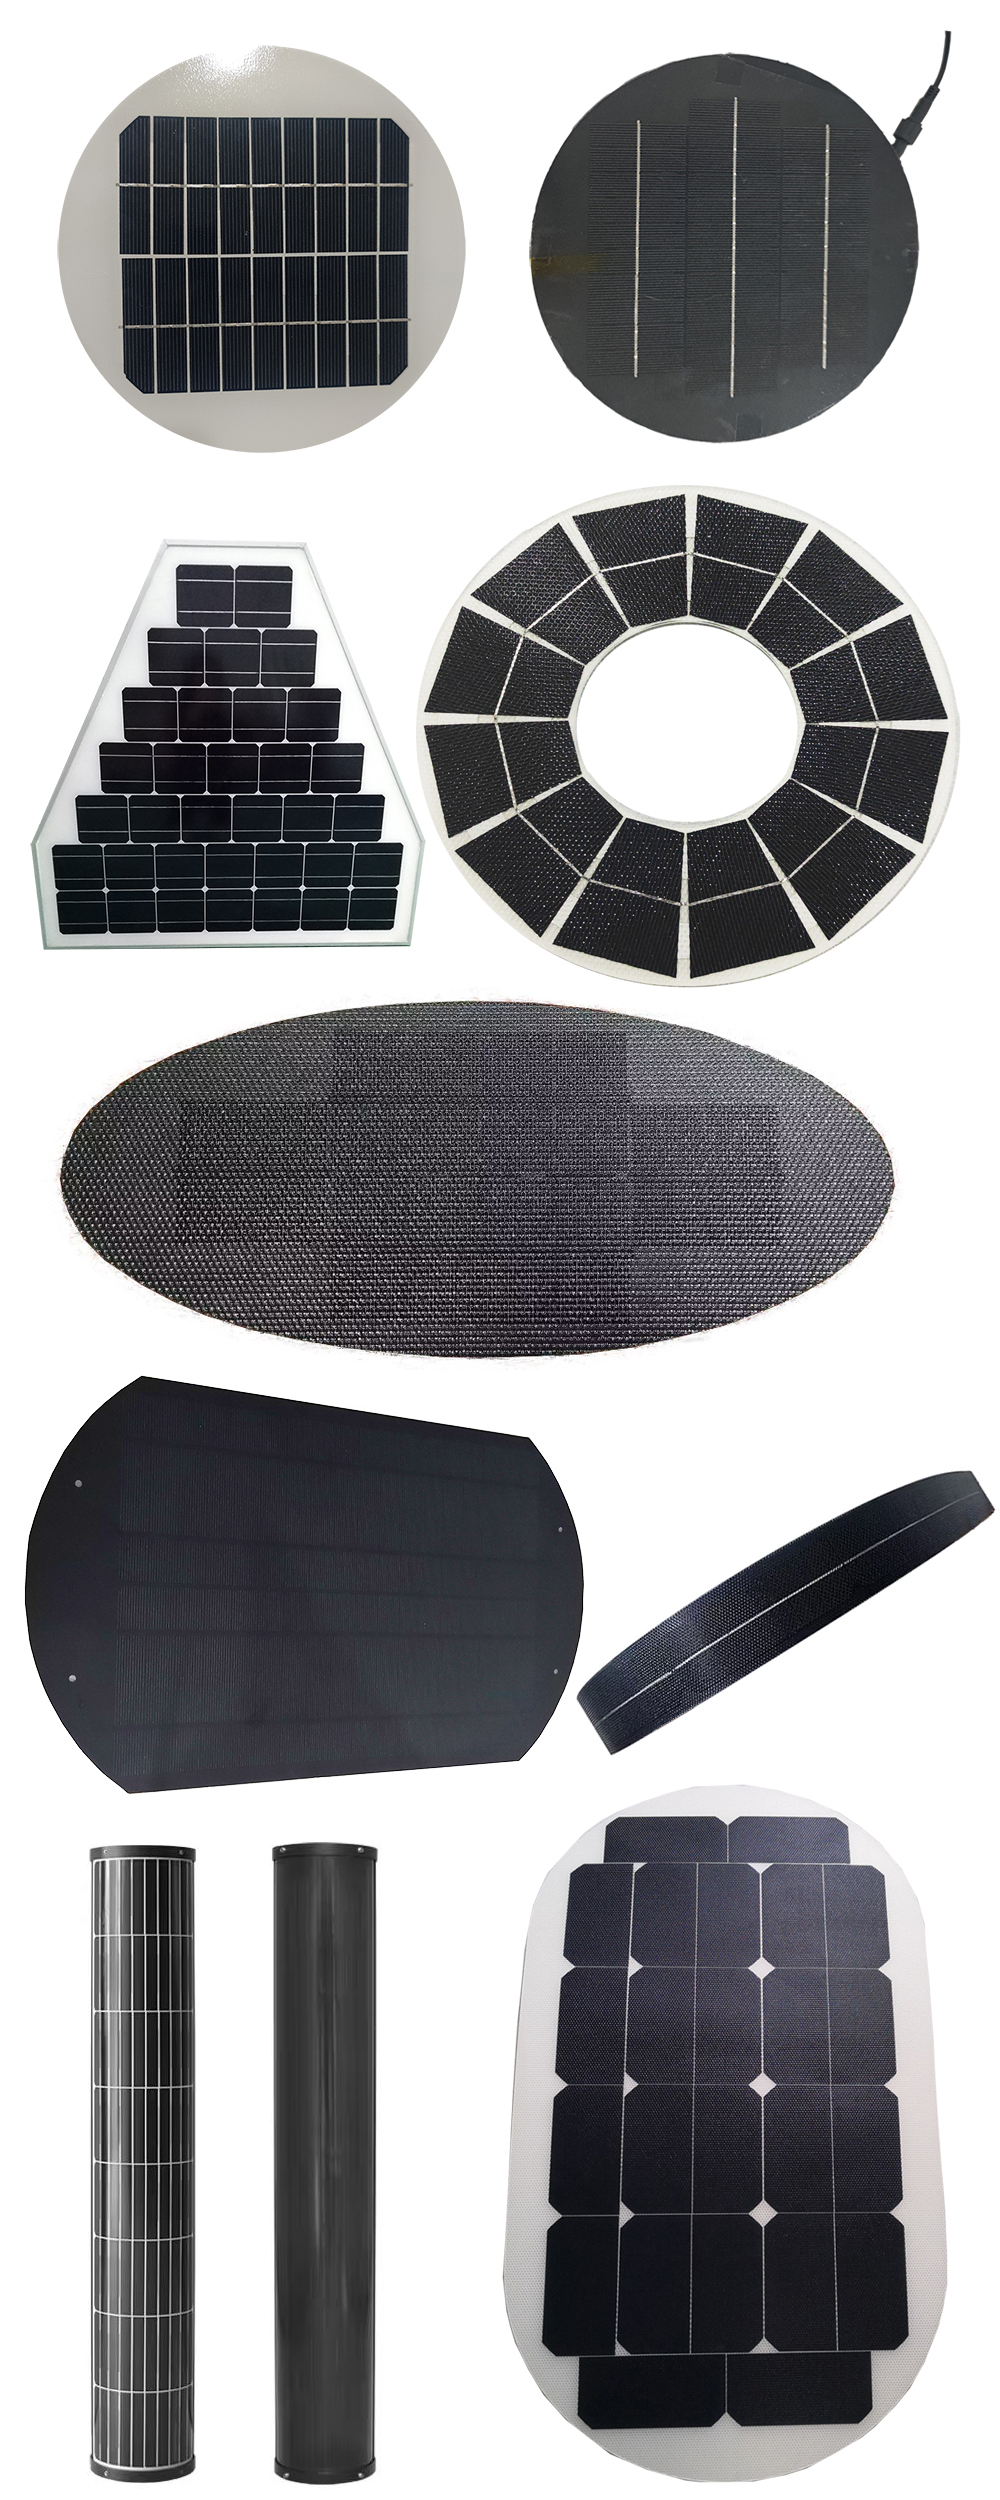 common customized solar panel example 